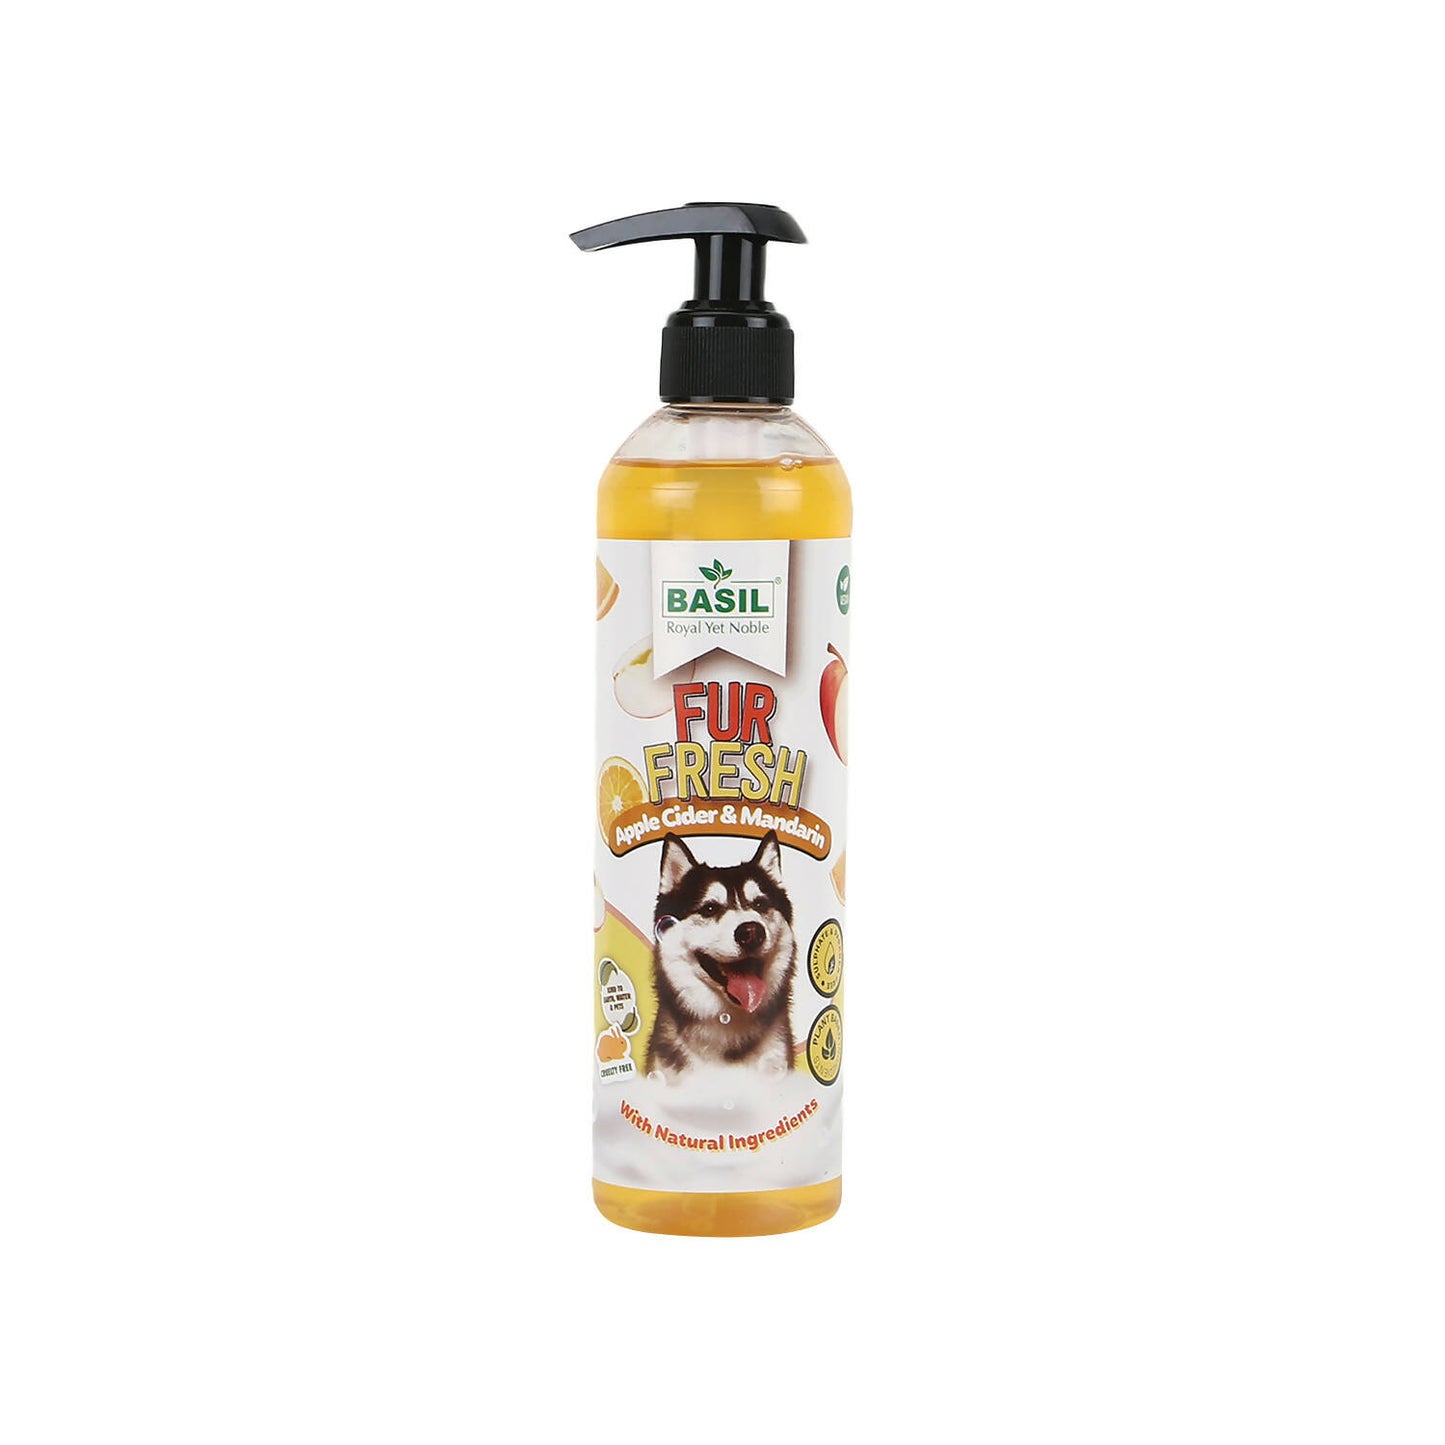 Basil - Fur Fresh Apple Cider & Mandarin Shampoo For Dogs